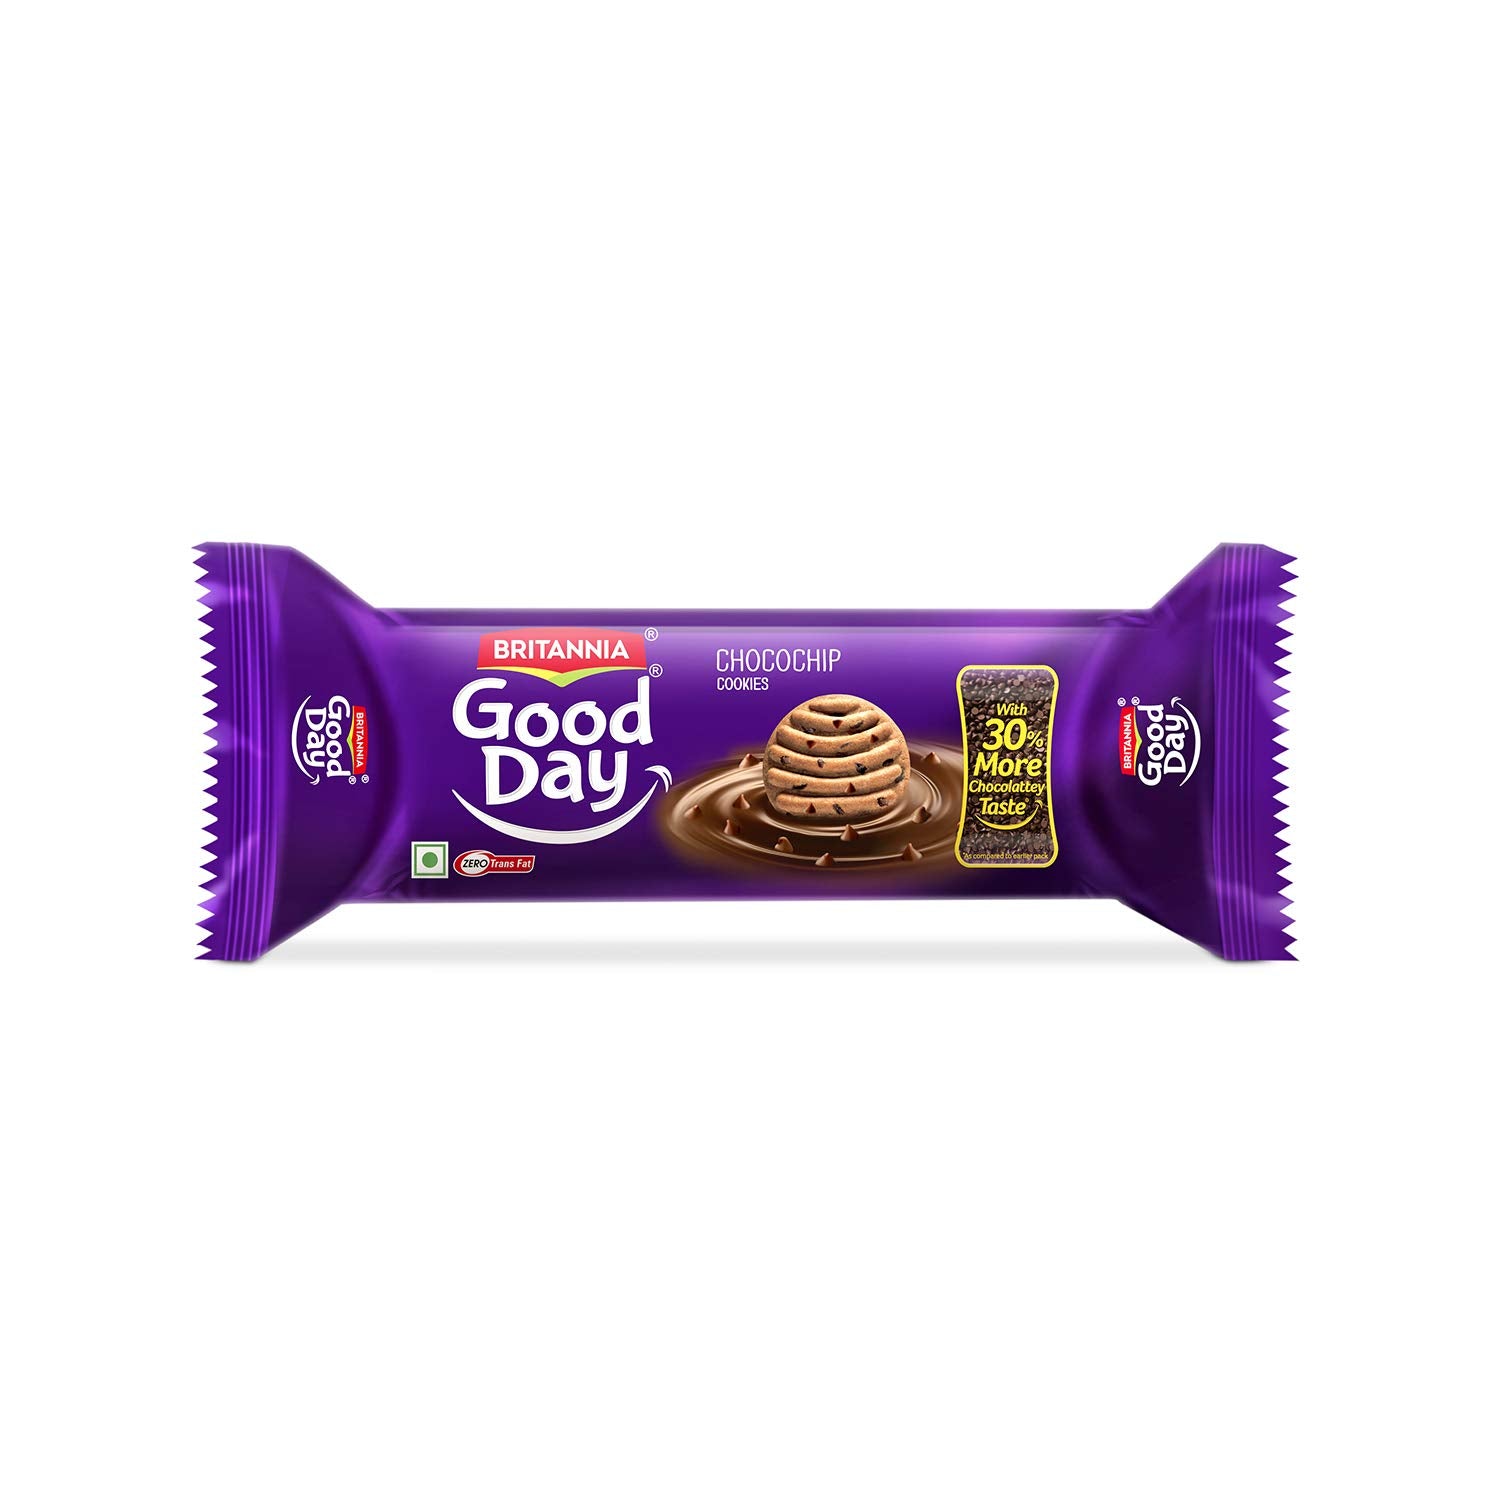 Britannia - GoodDay Choco chips Cookies 120g